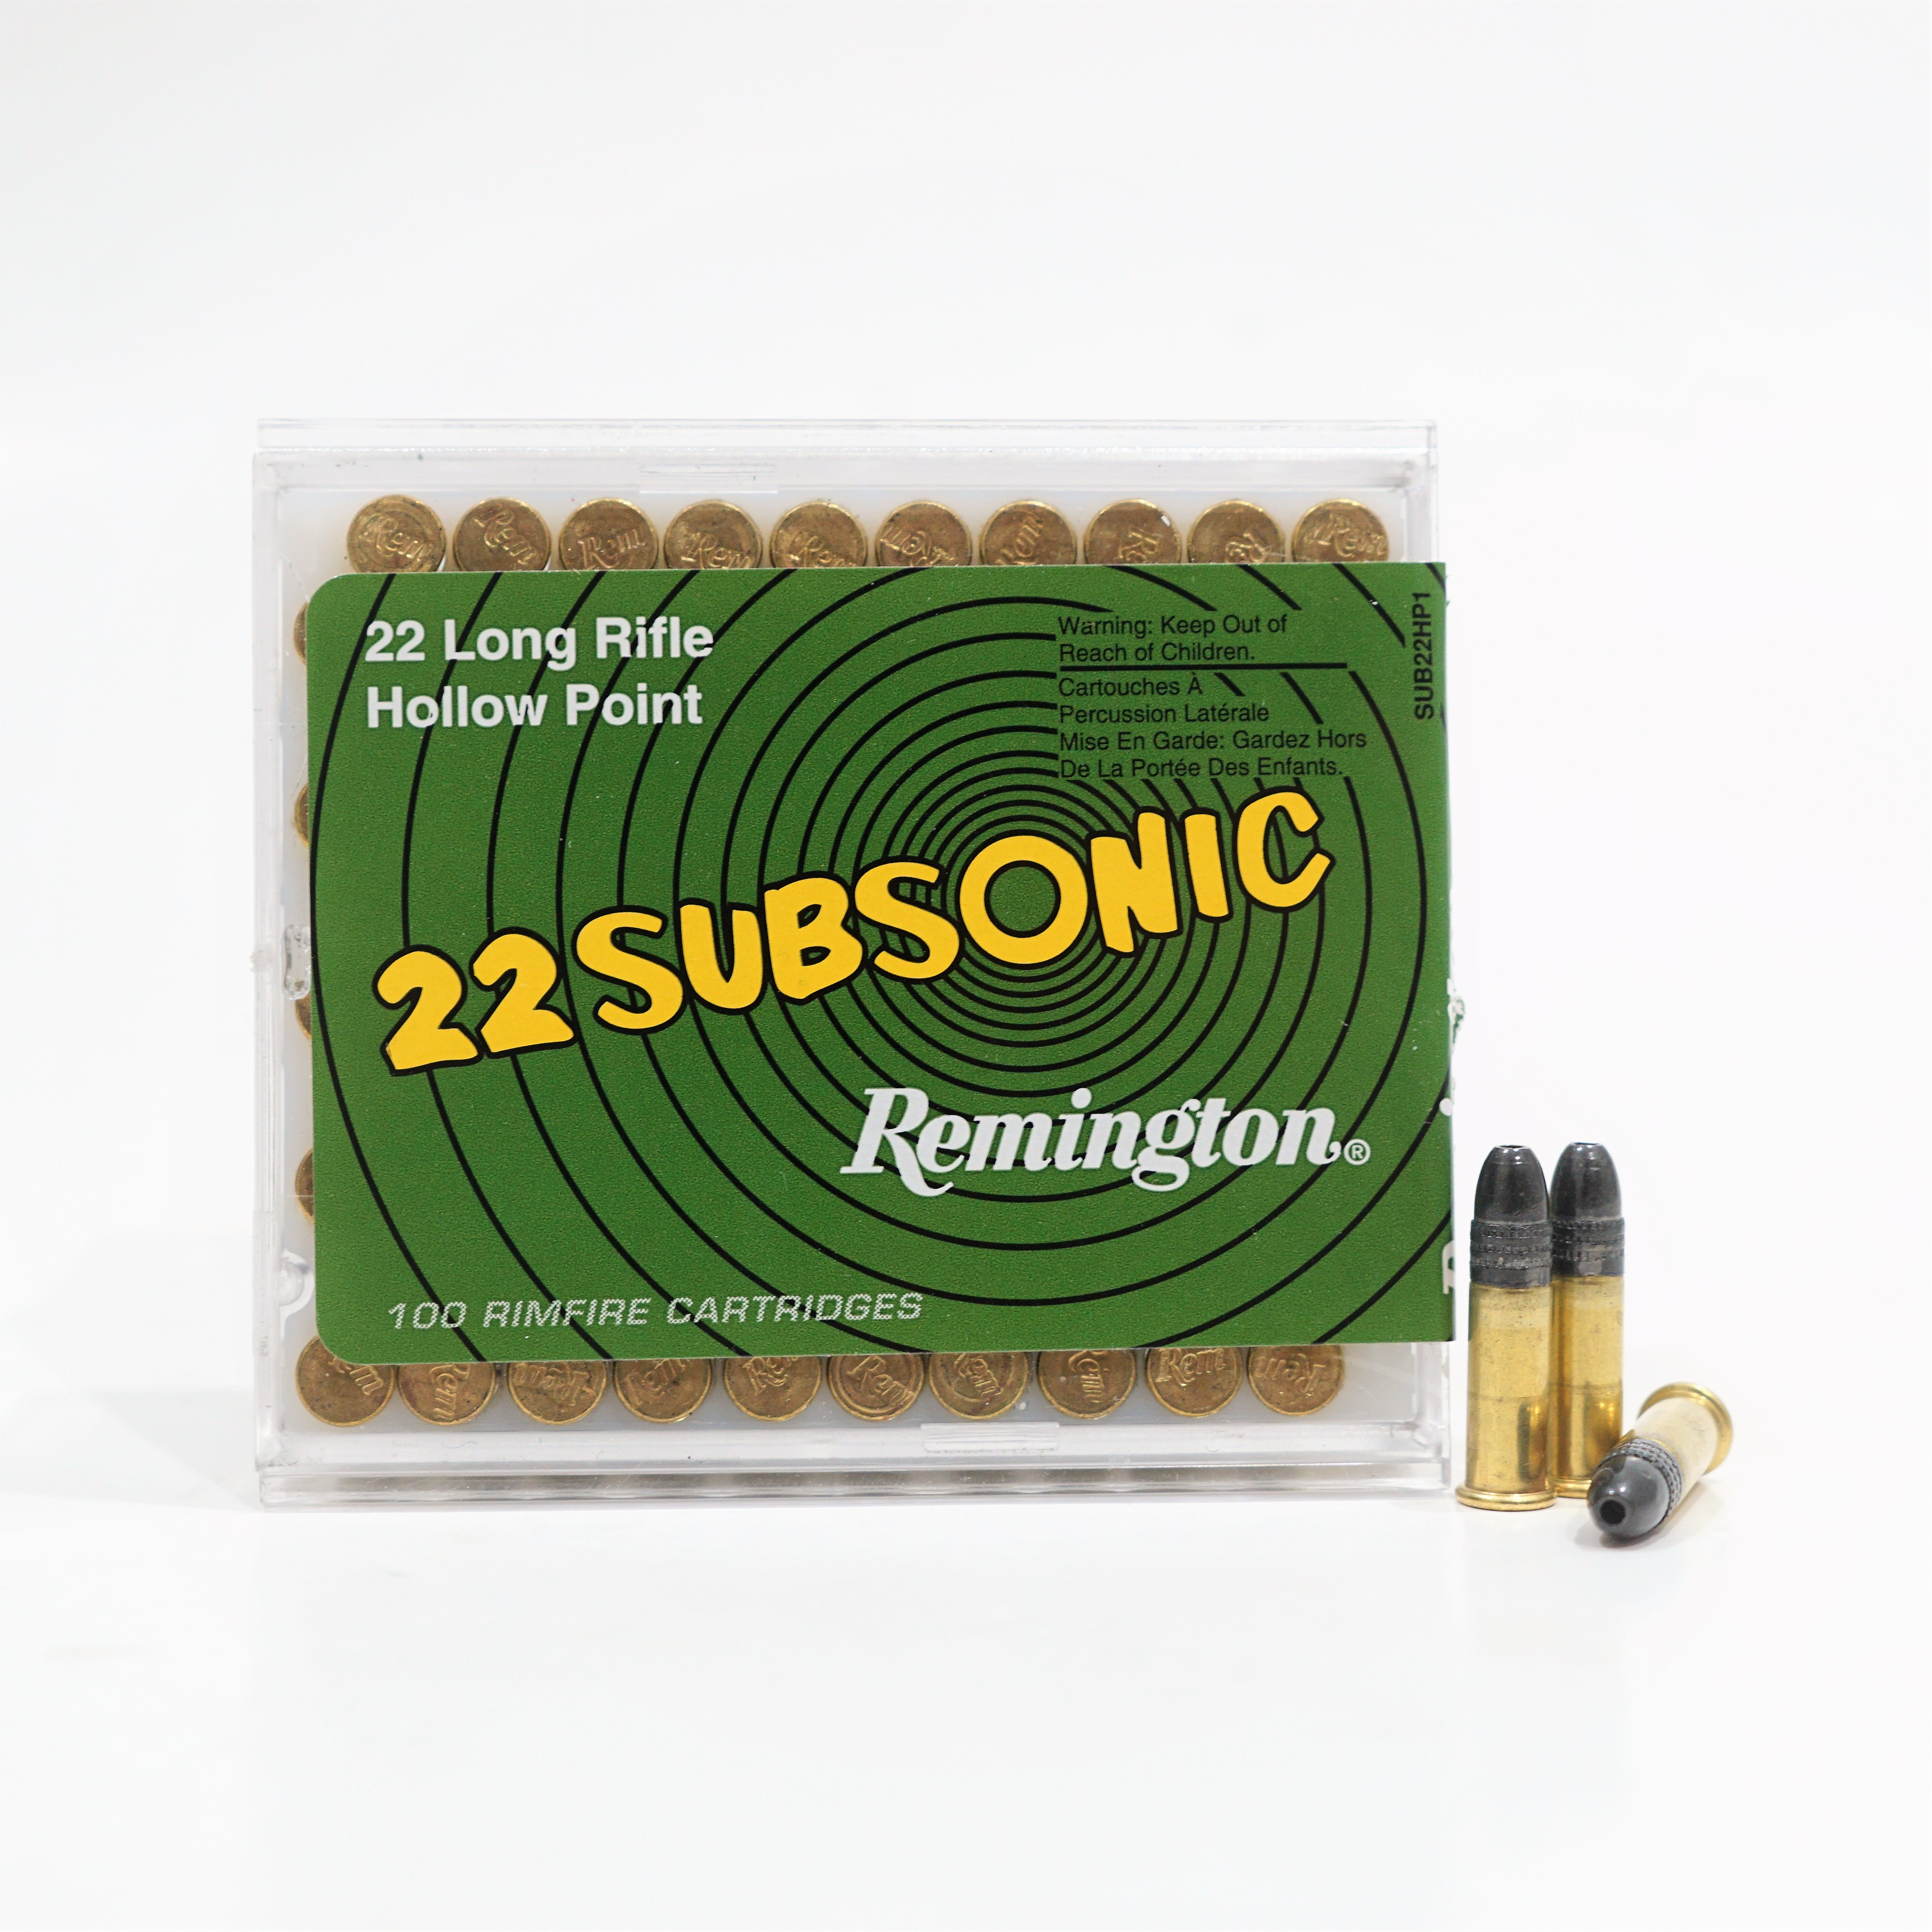 Remington Subsonic HP 22 LR patruuna 100kpl/rs 320m/sek 